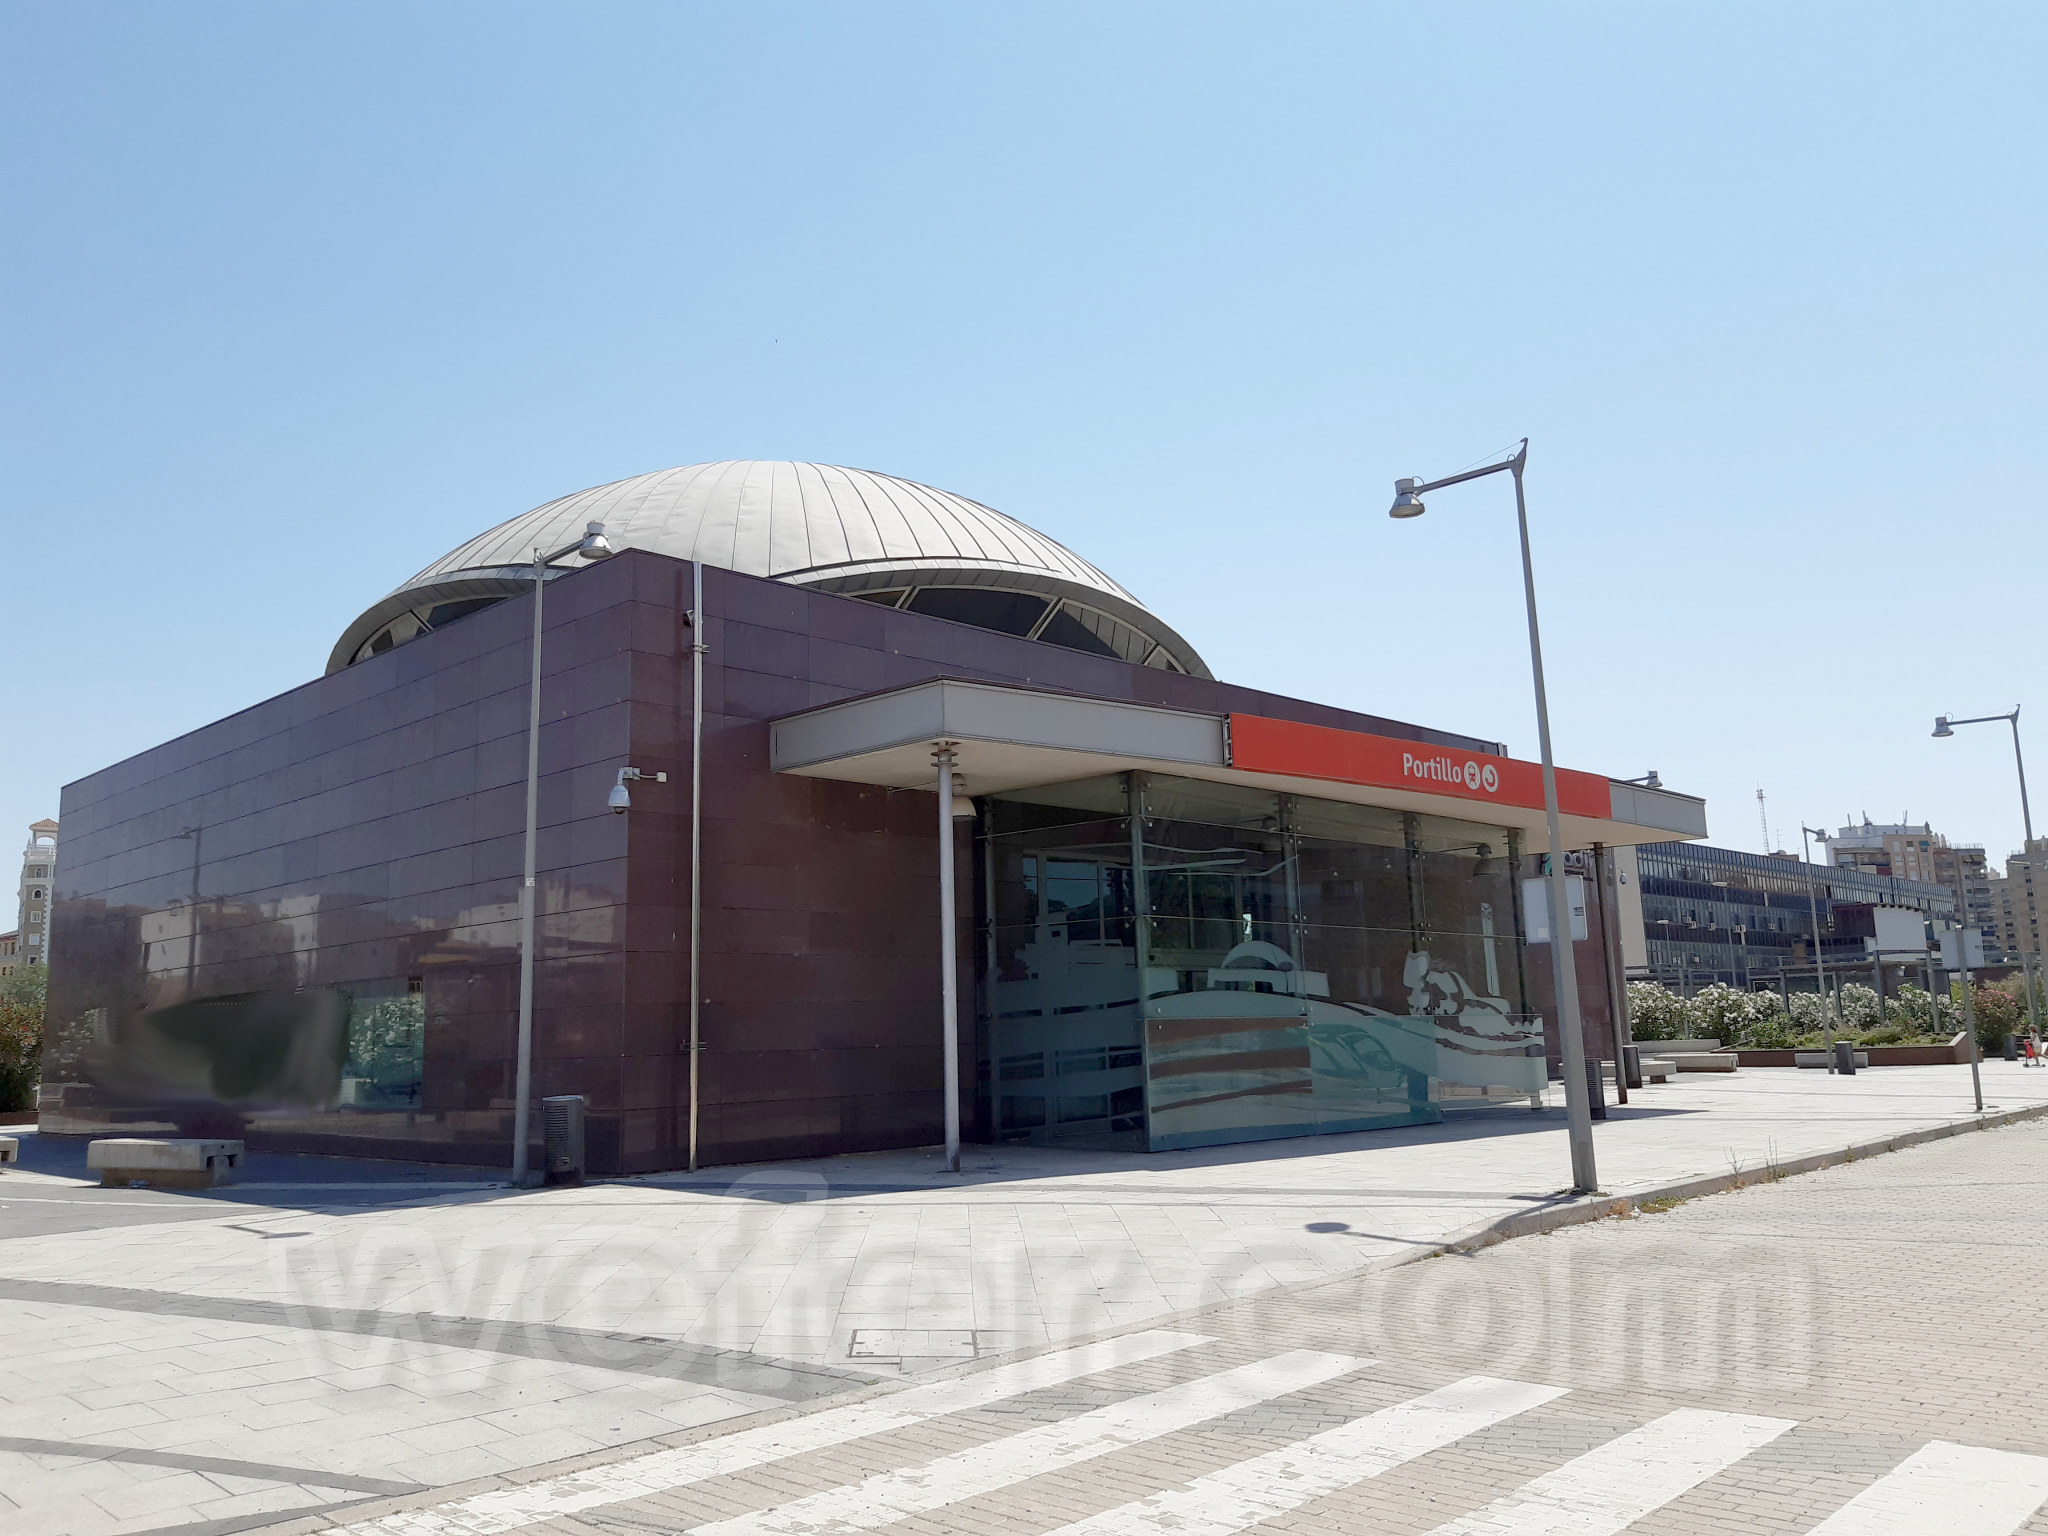 Renfe / ADIF: Zaragoza - El Portillo